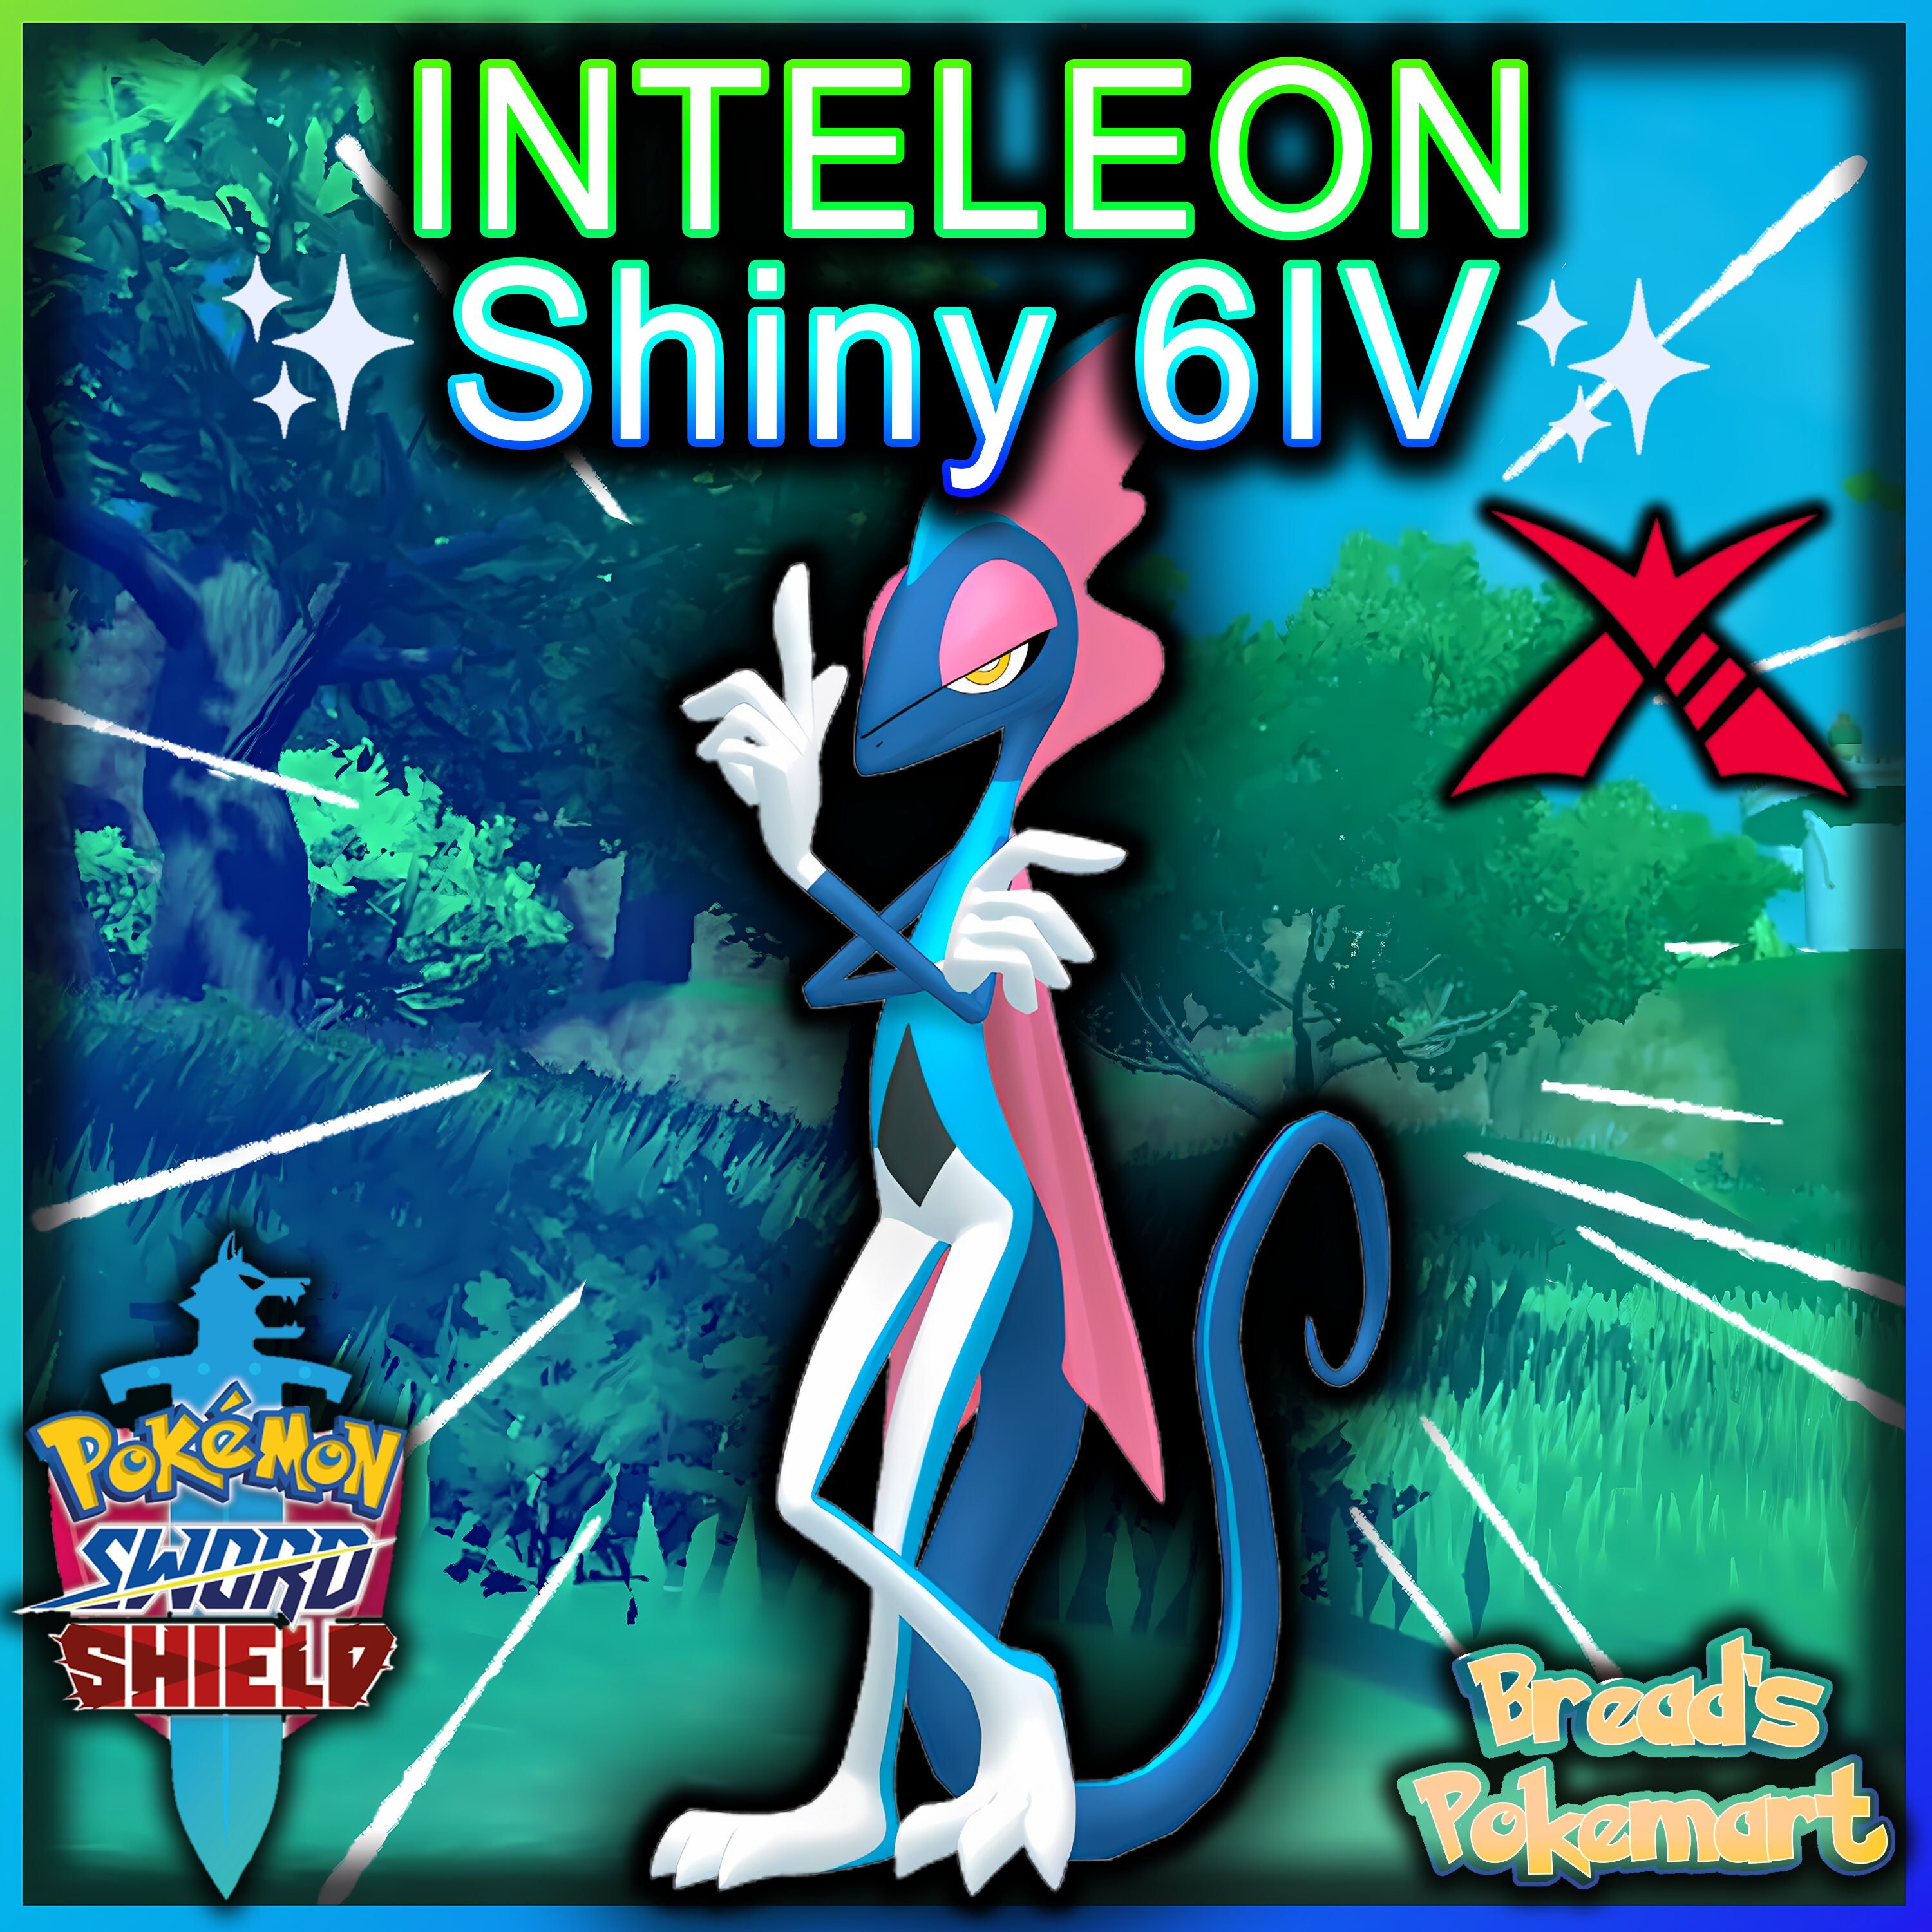 🌟Cinderace Shiny non shiny Best Stats Pokemon Sword and Shield Home🌟